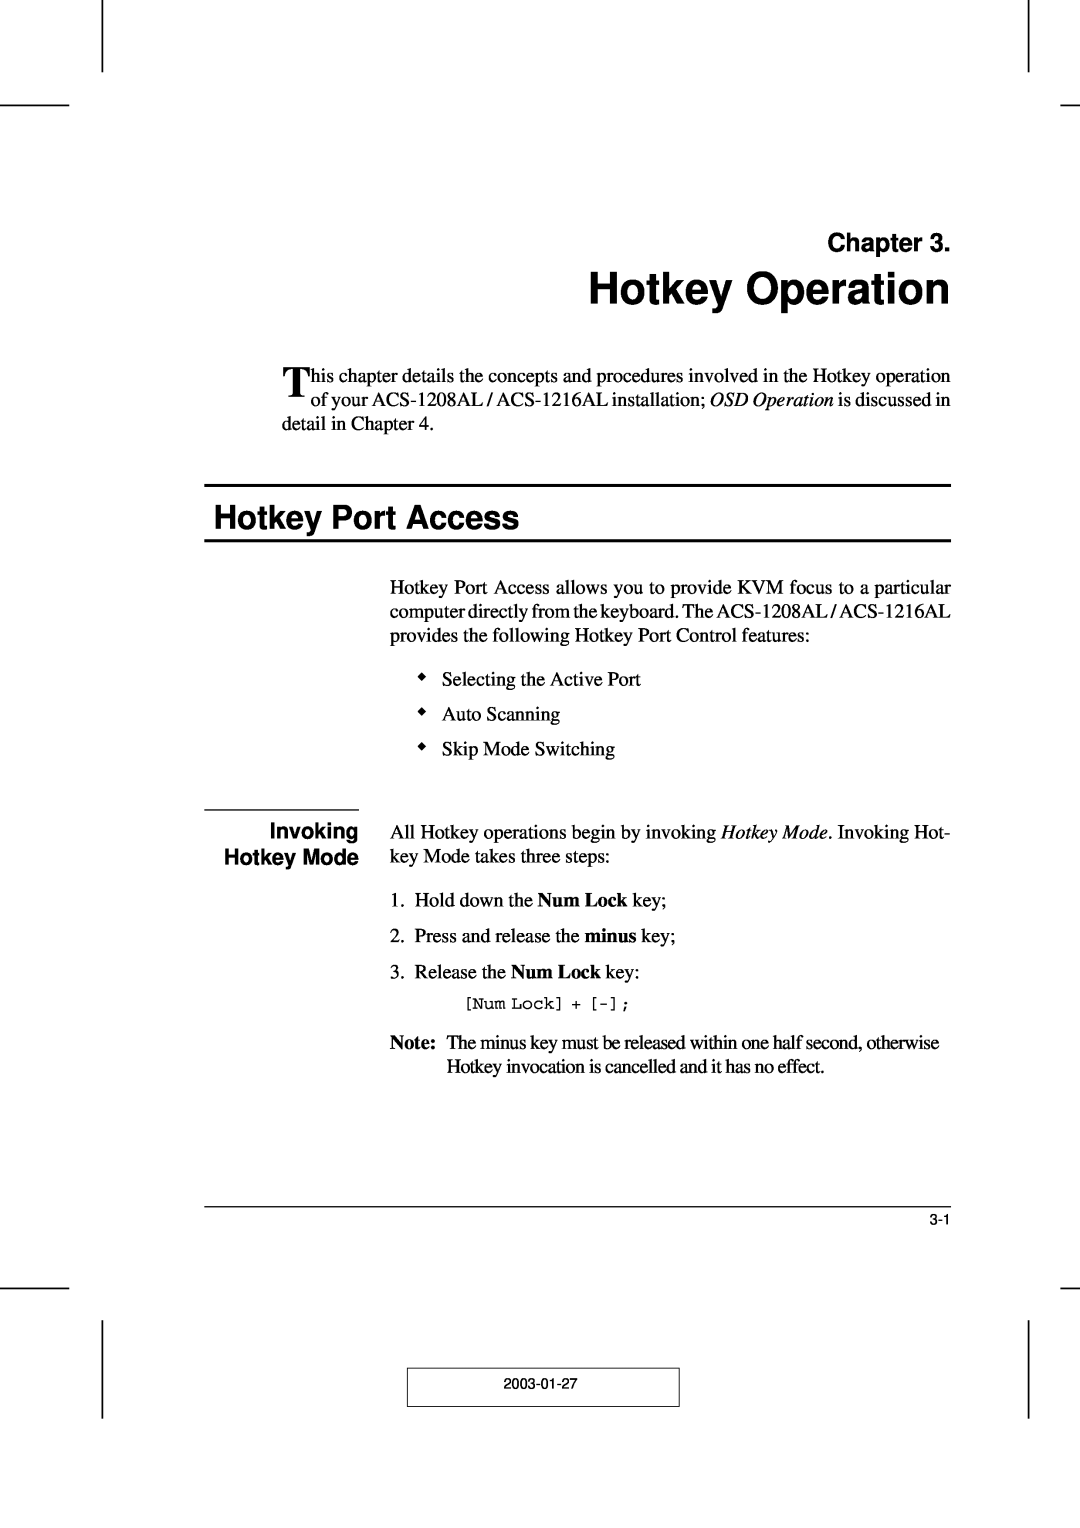 ATEN Technology ACS-1216AL, ACS-1208AL user manual Hotkey Operation, Hotkey Port Access, Invoking Hotkey Mode, Chapter 